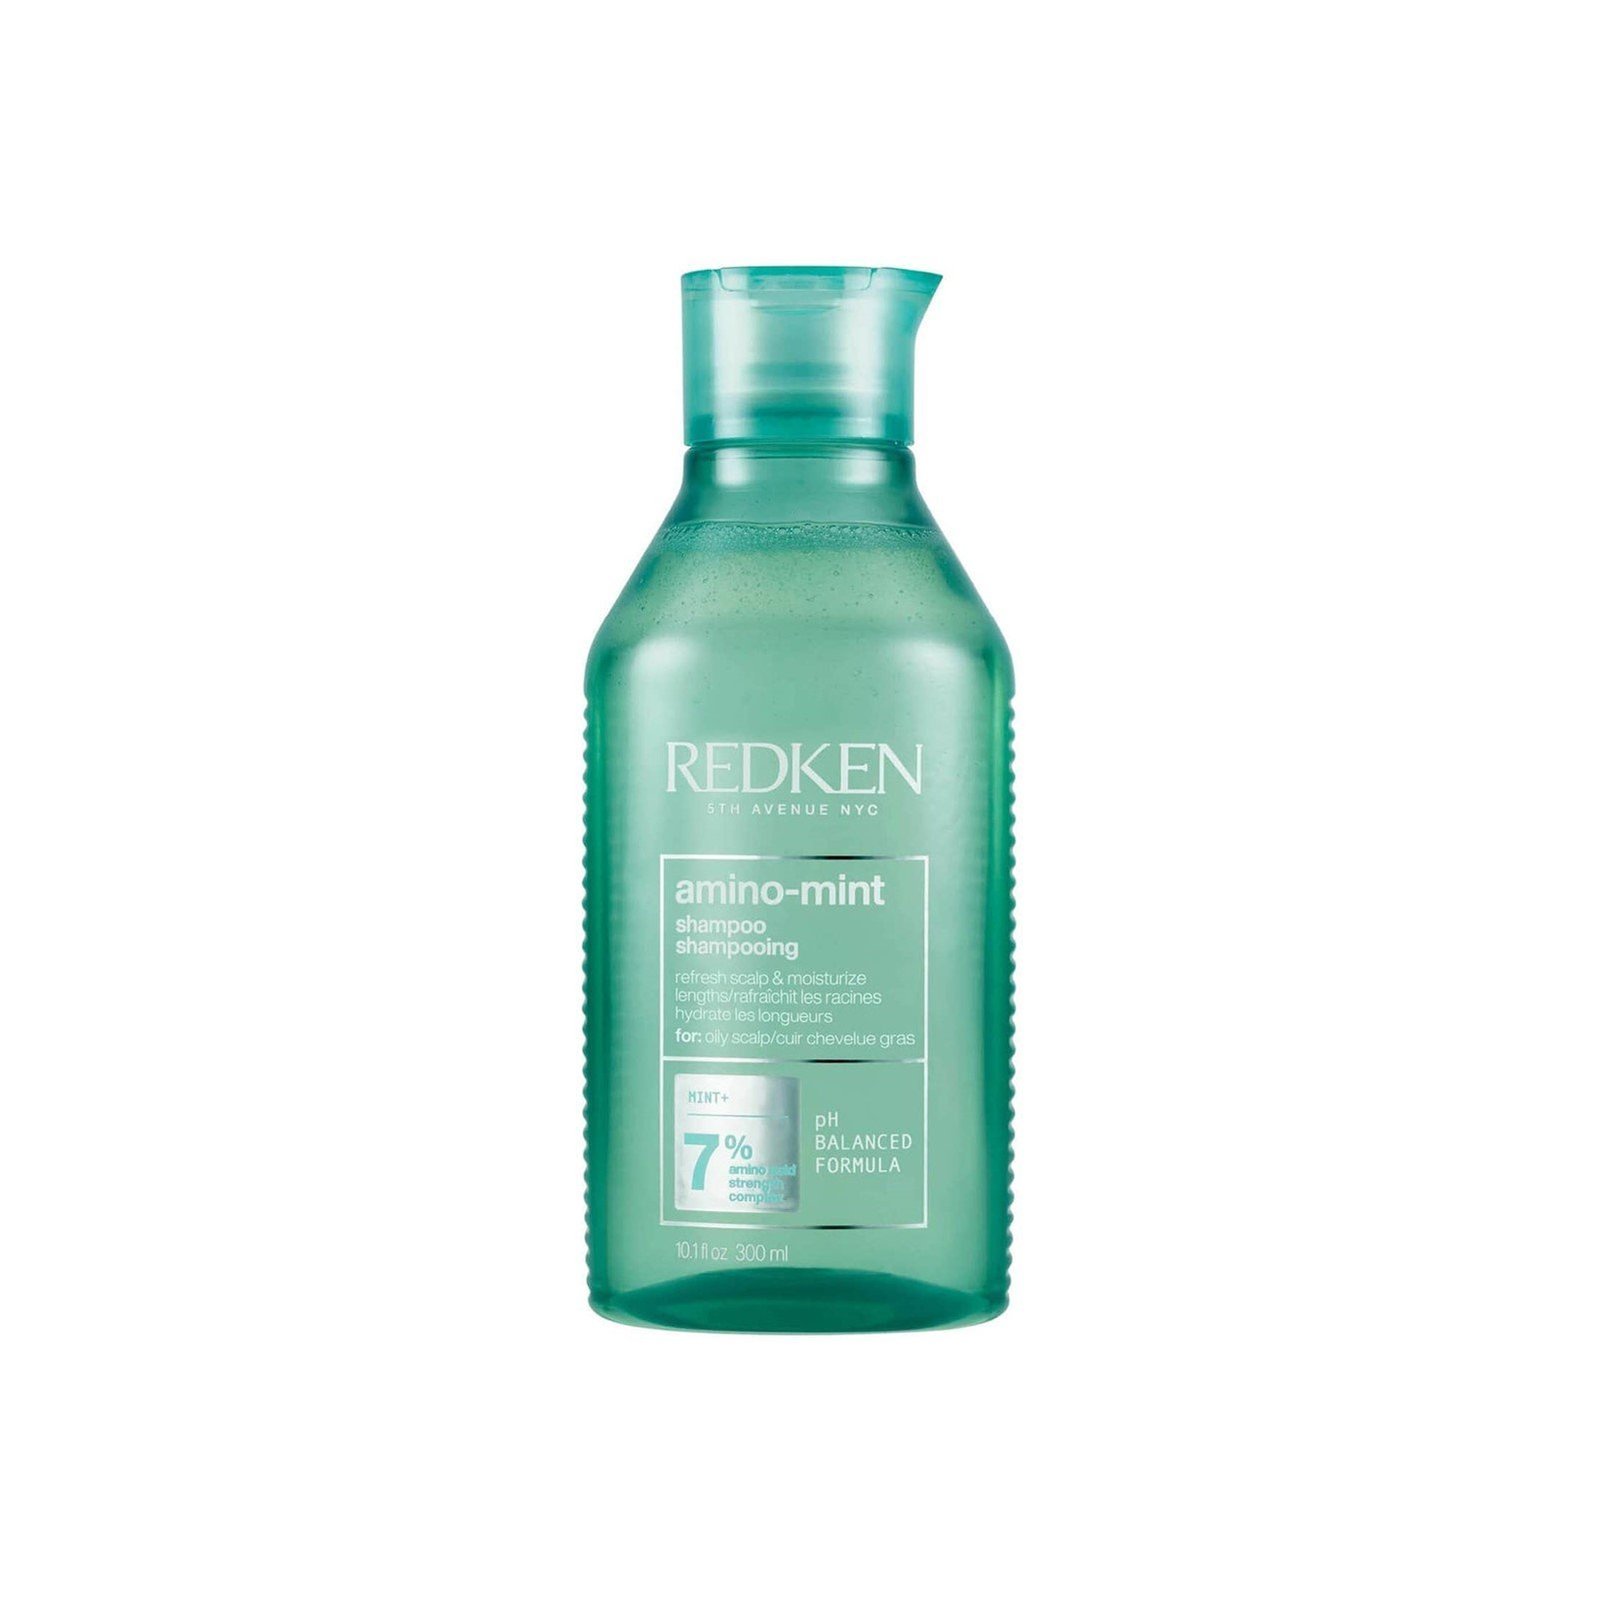 Redken Amino-Mint Shampoo 300ml (10.1 fl oz)